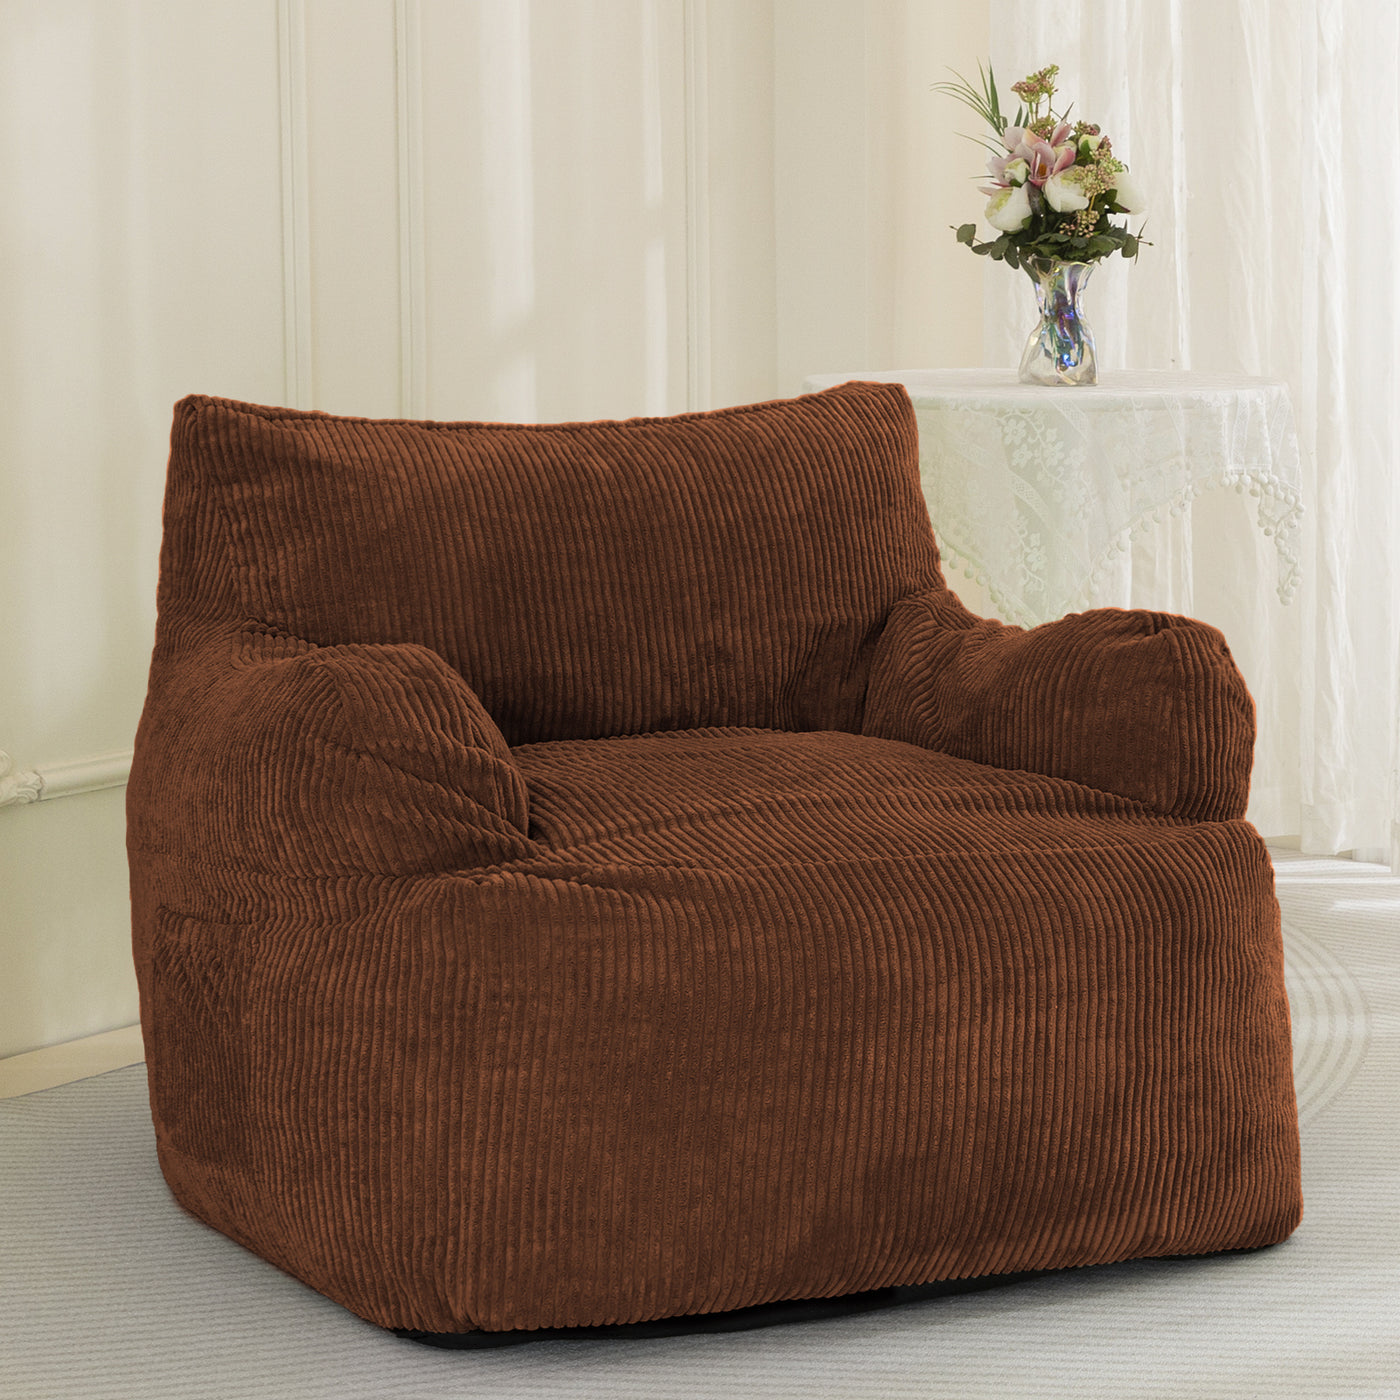 MAXYOYO Giant Bean Bag Chair, Stuffed Bean Bag Couch for Living Room, Coffee